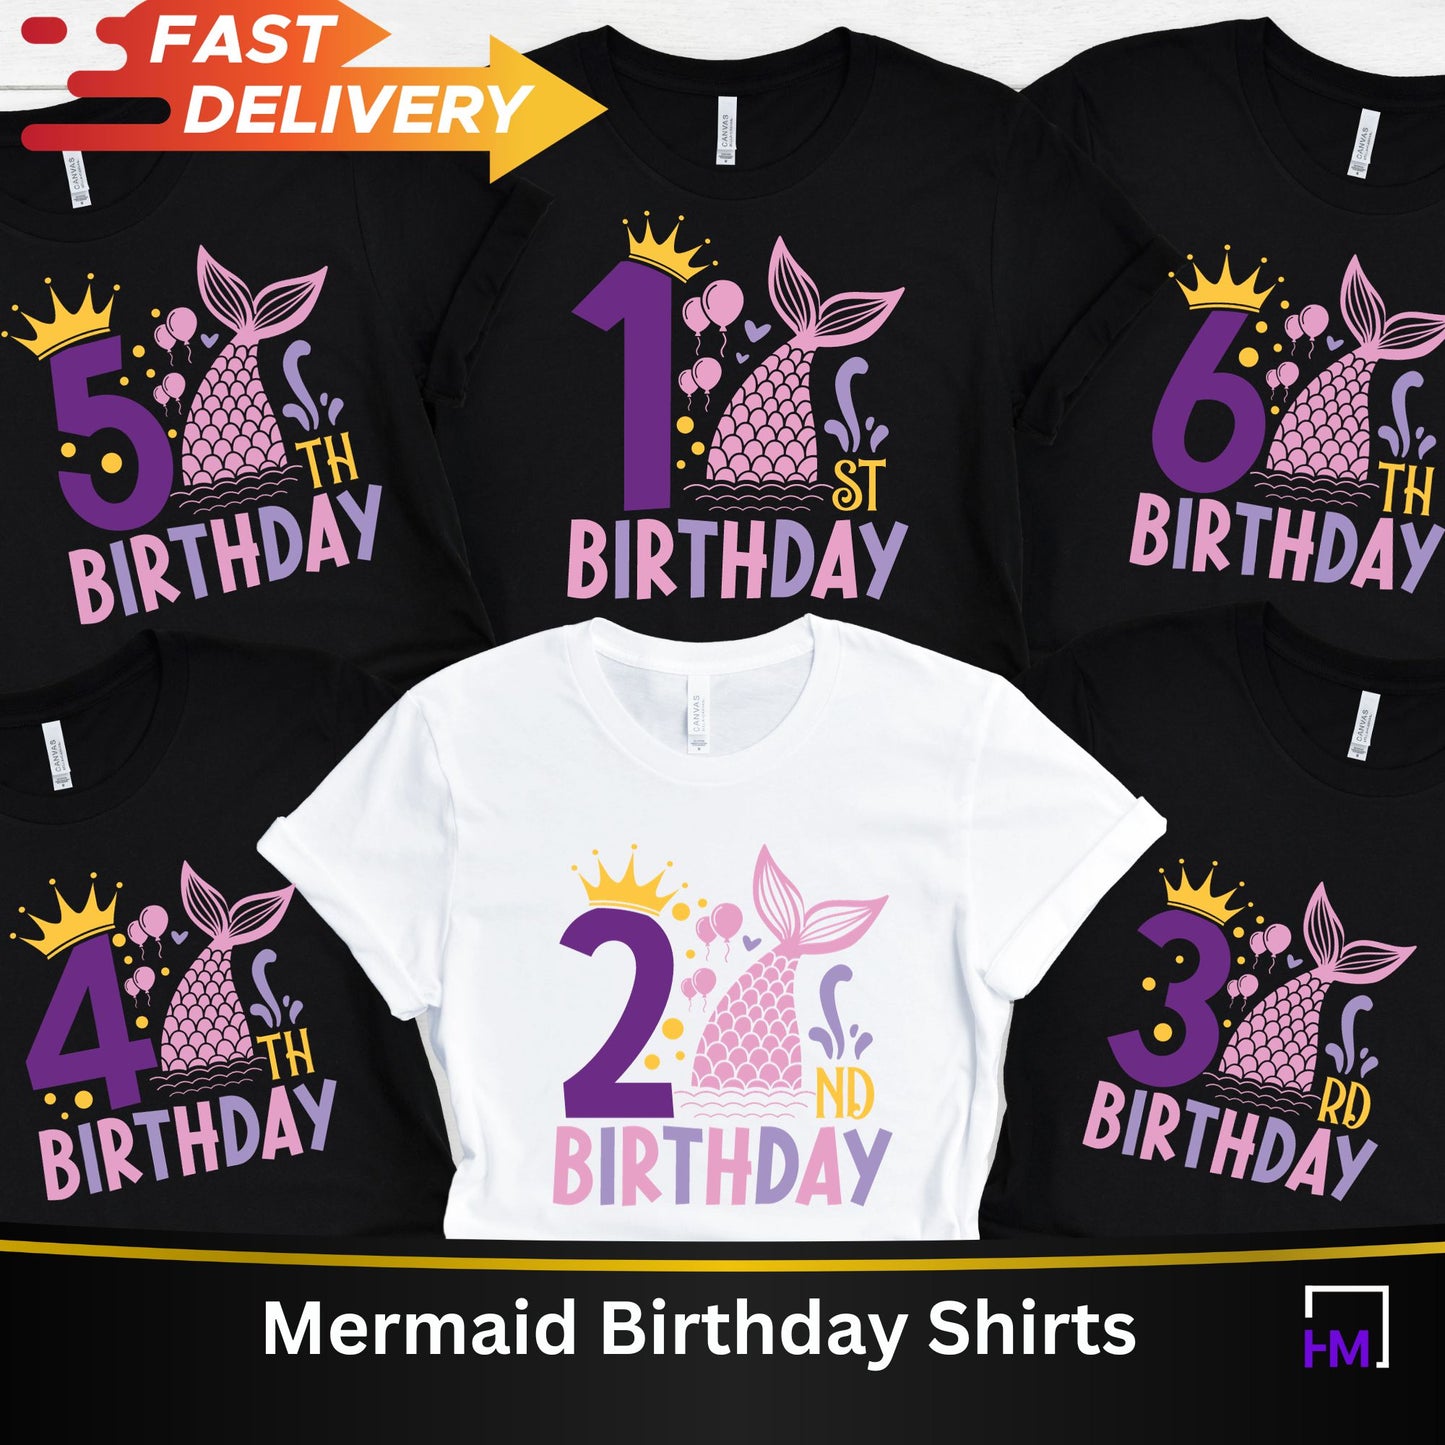 Mermaid Birthday Shirts